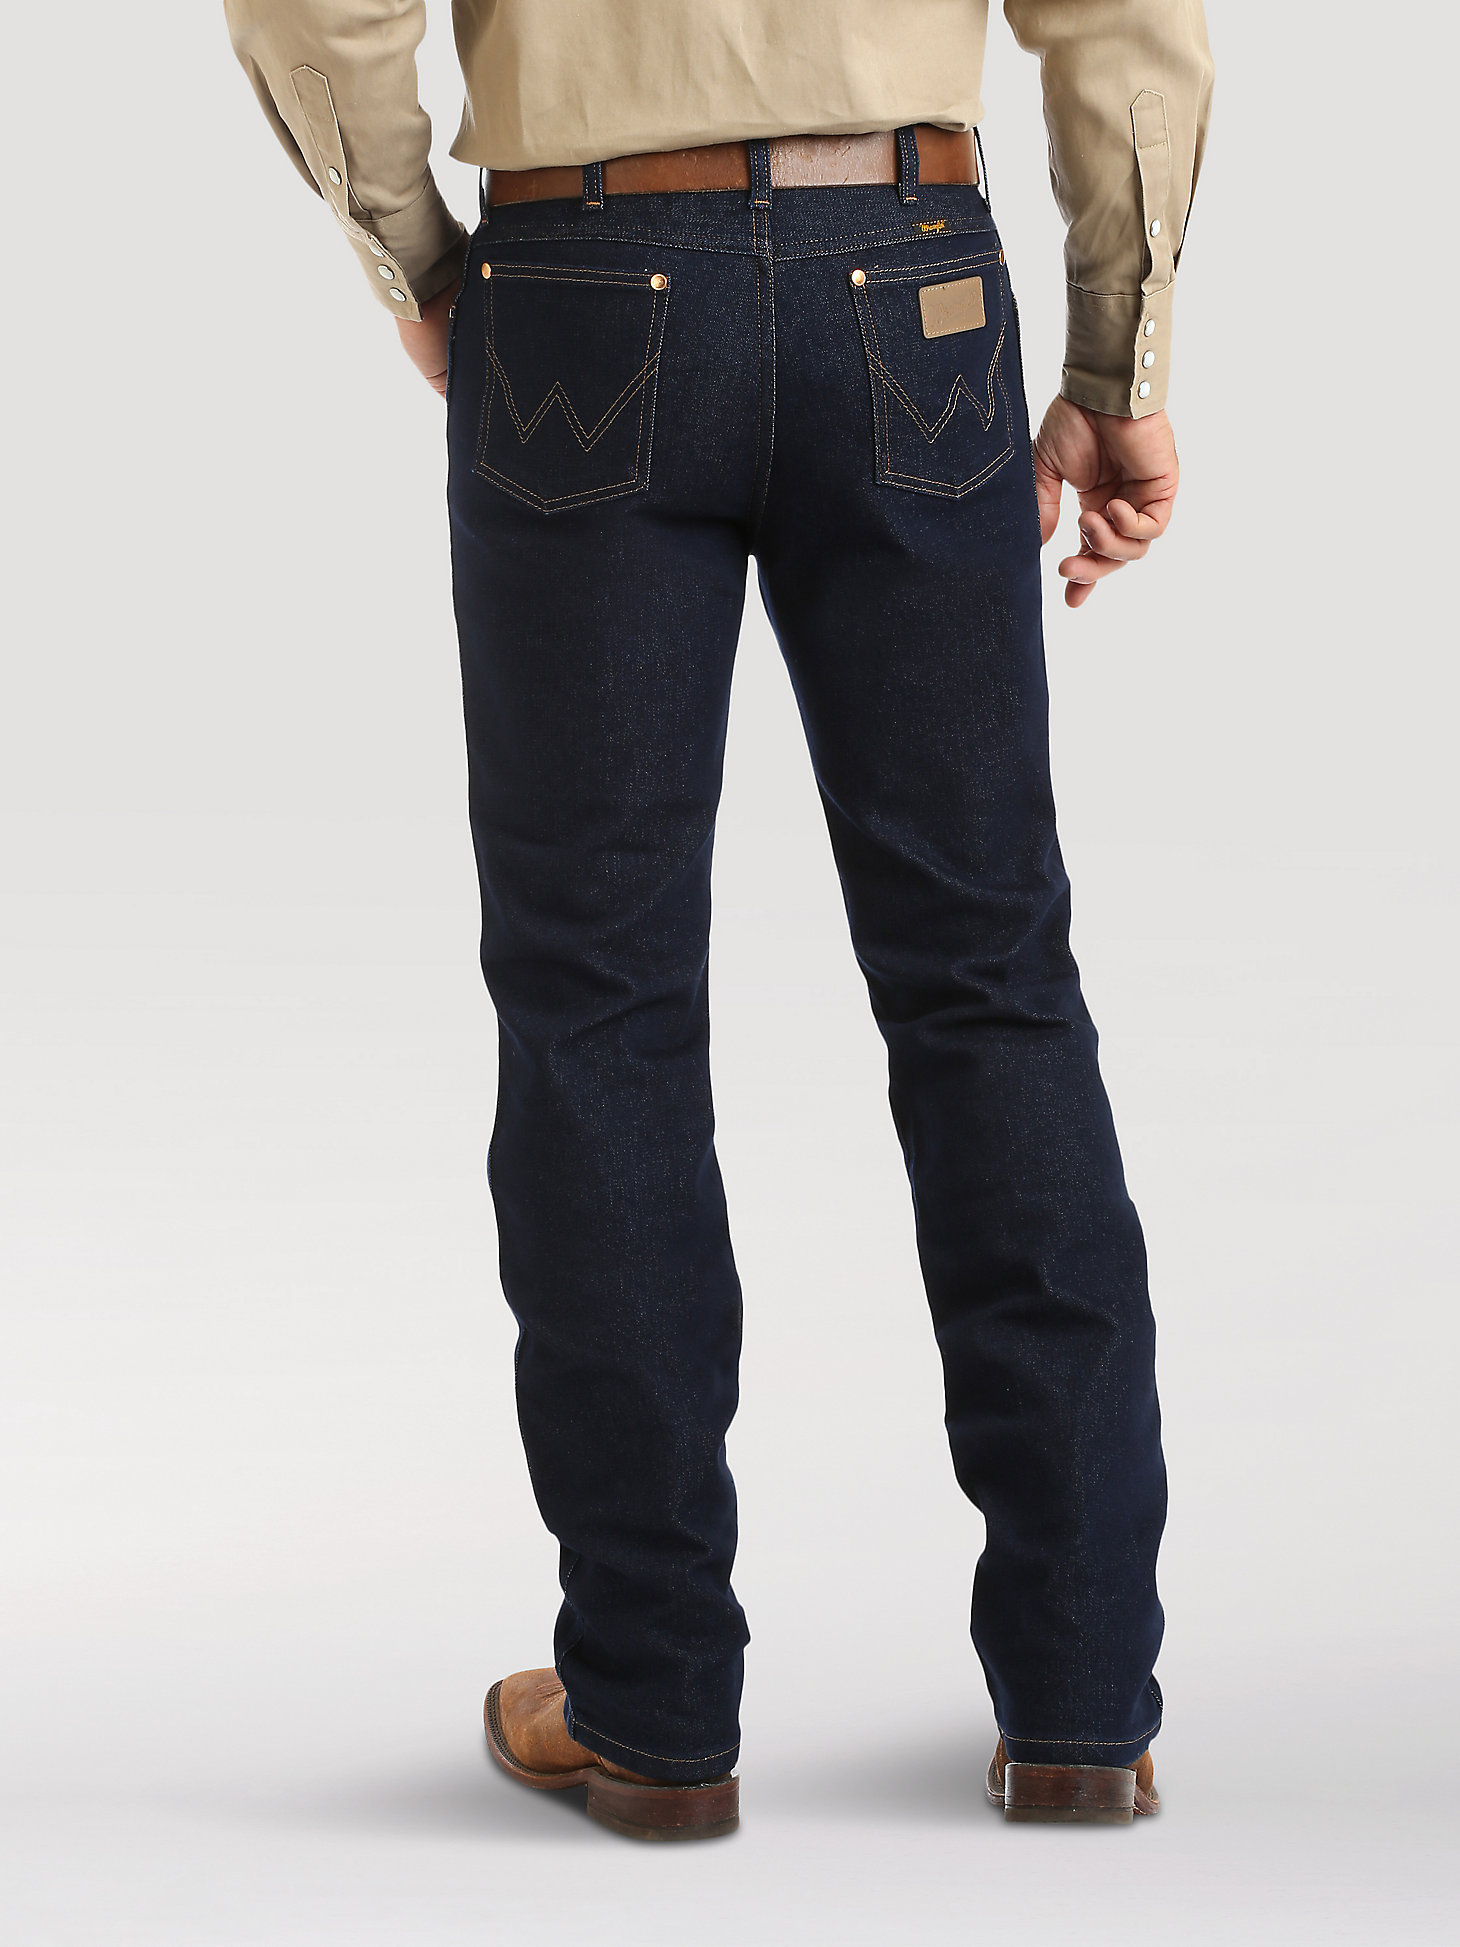 Wrangler® Cowboy Cut® Original Fit Active Flex Jeans in Prewashed Indigo alternative view 3